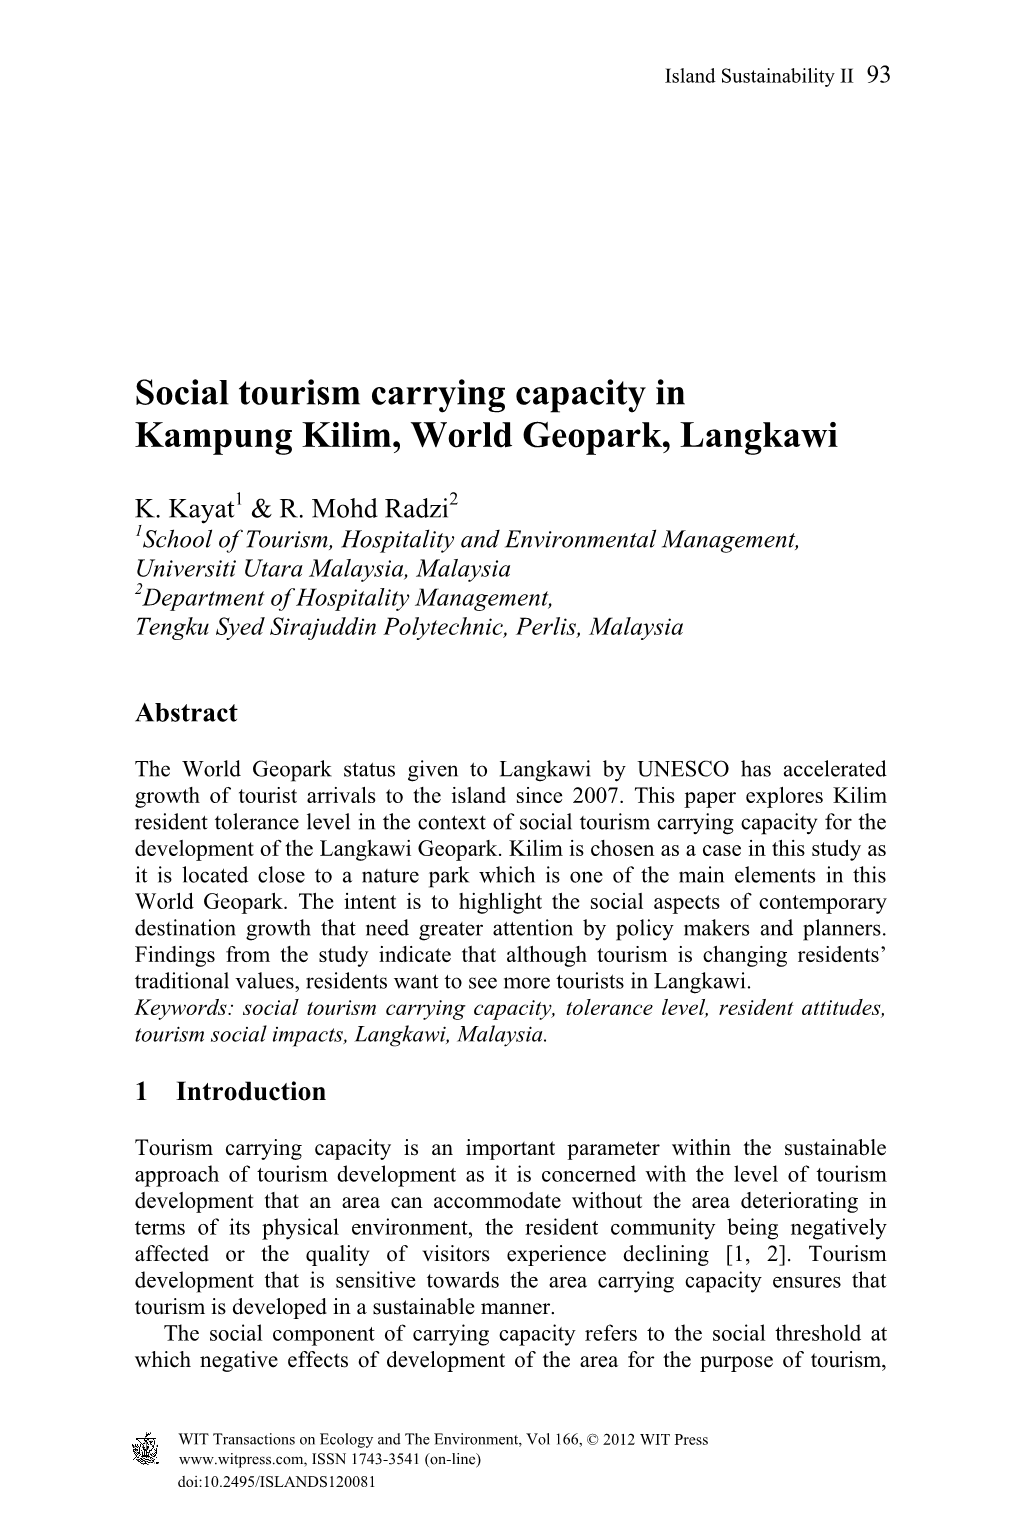 Social Tourism Carrying Capacity in Kampung Kilim, World Geopark, Langkawi